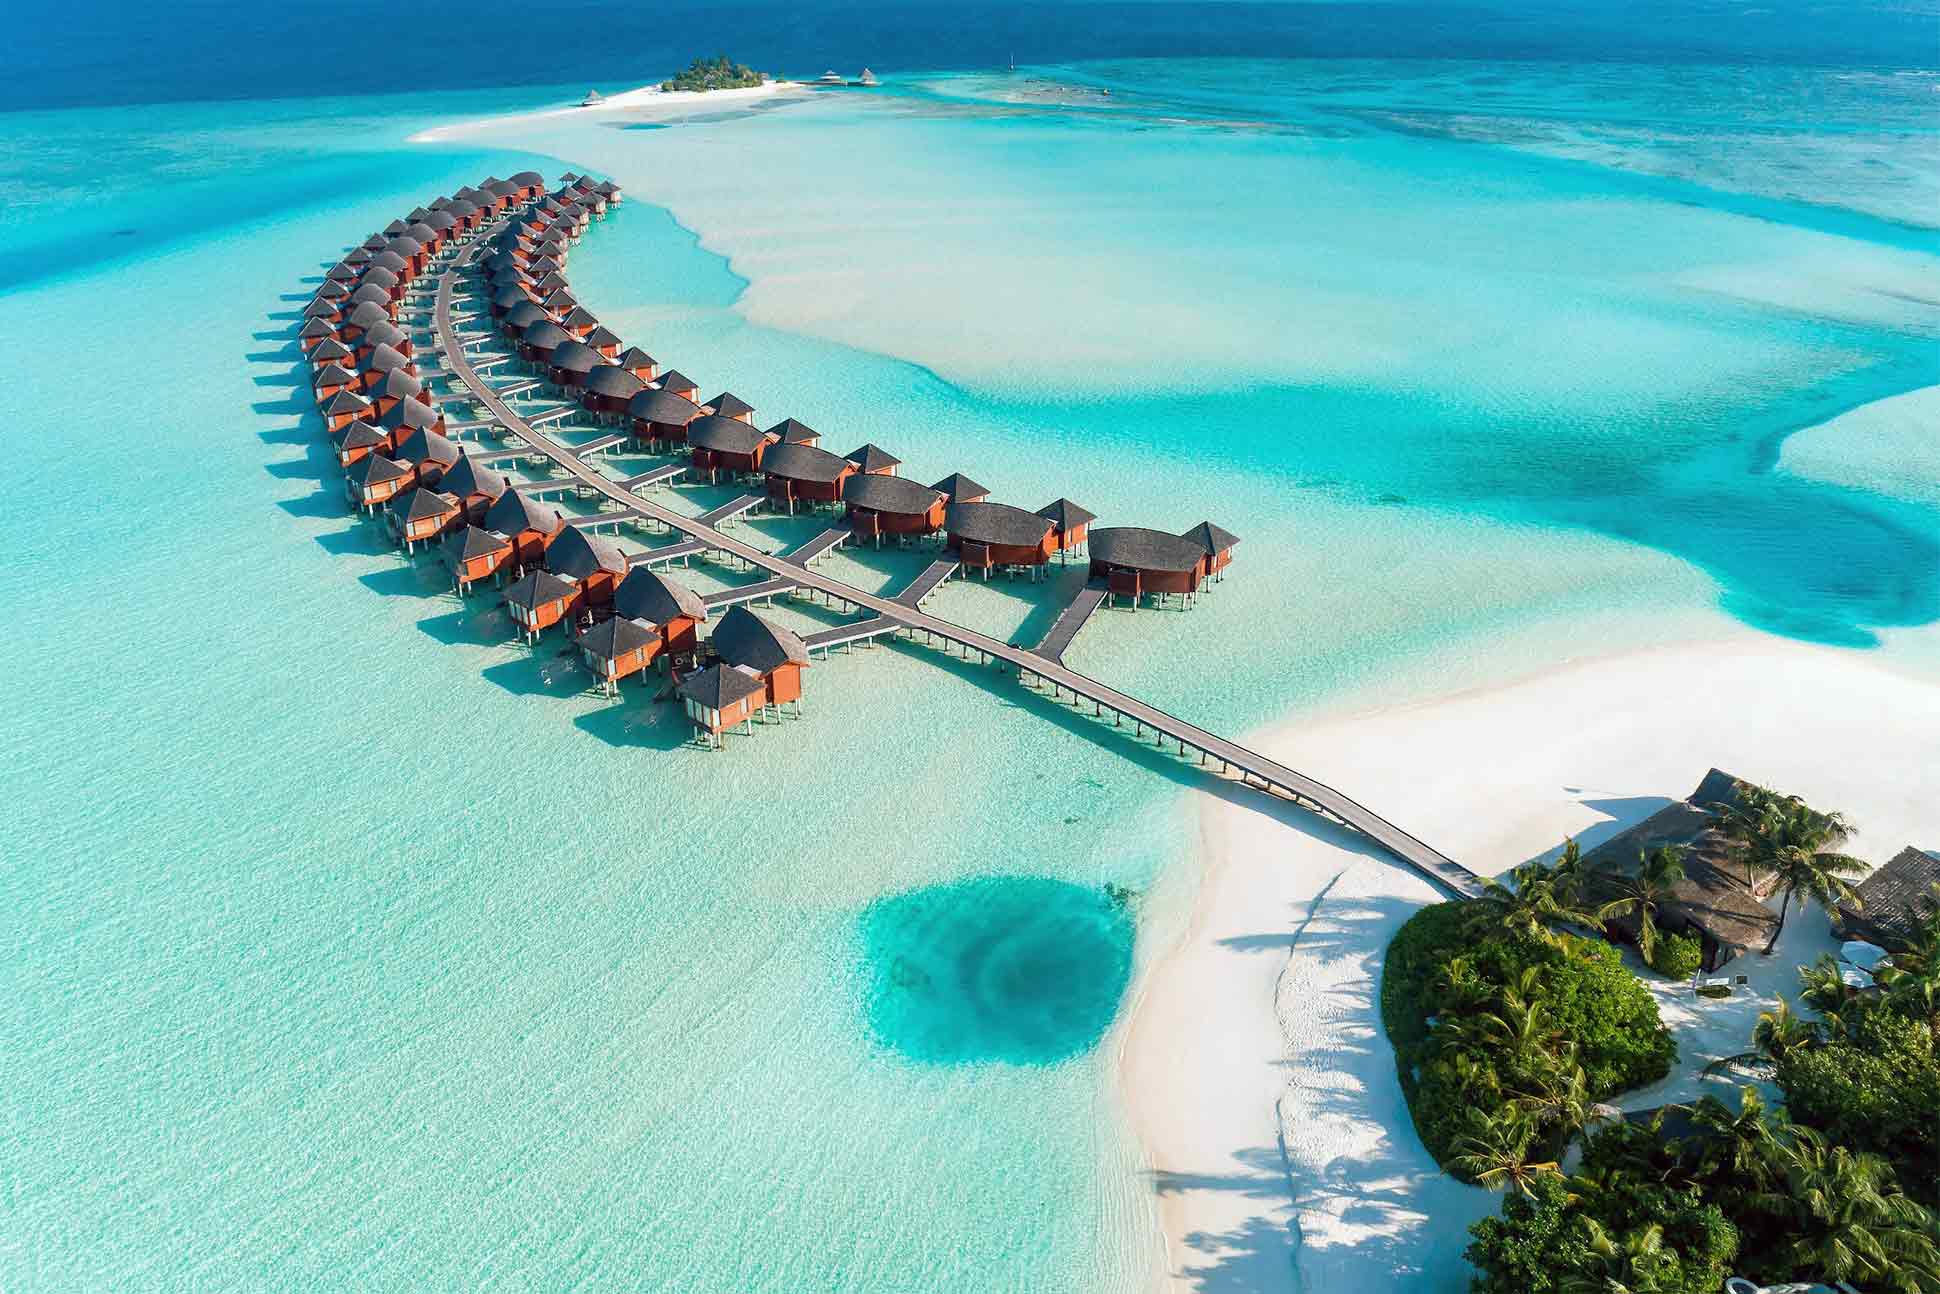 Aerial of the Anantara Dhigu Maldives Resort, The Maldives